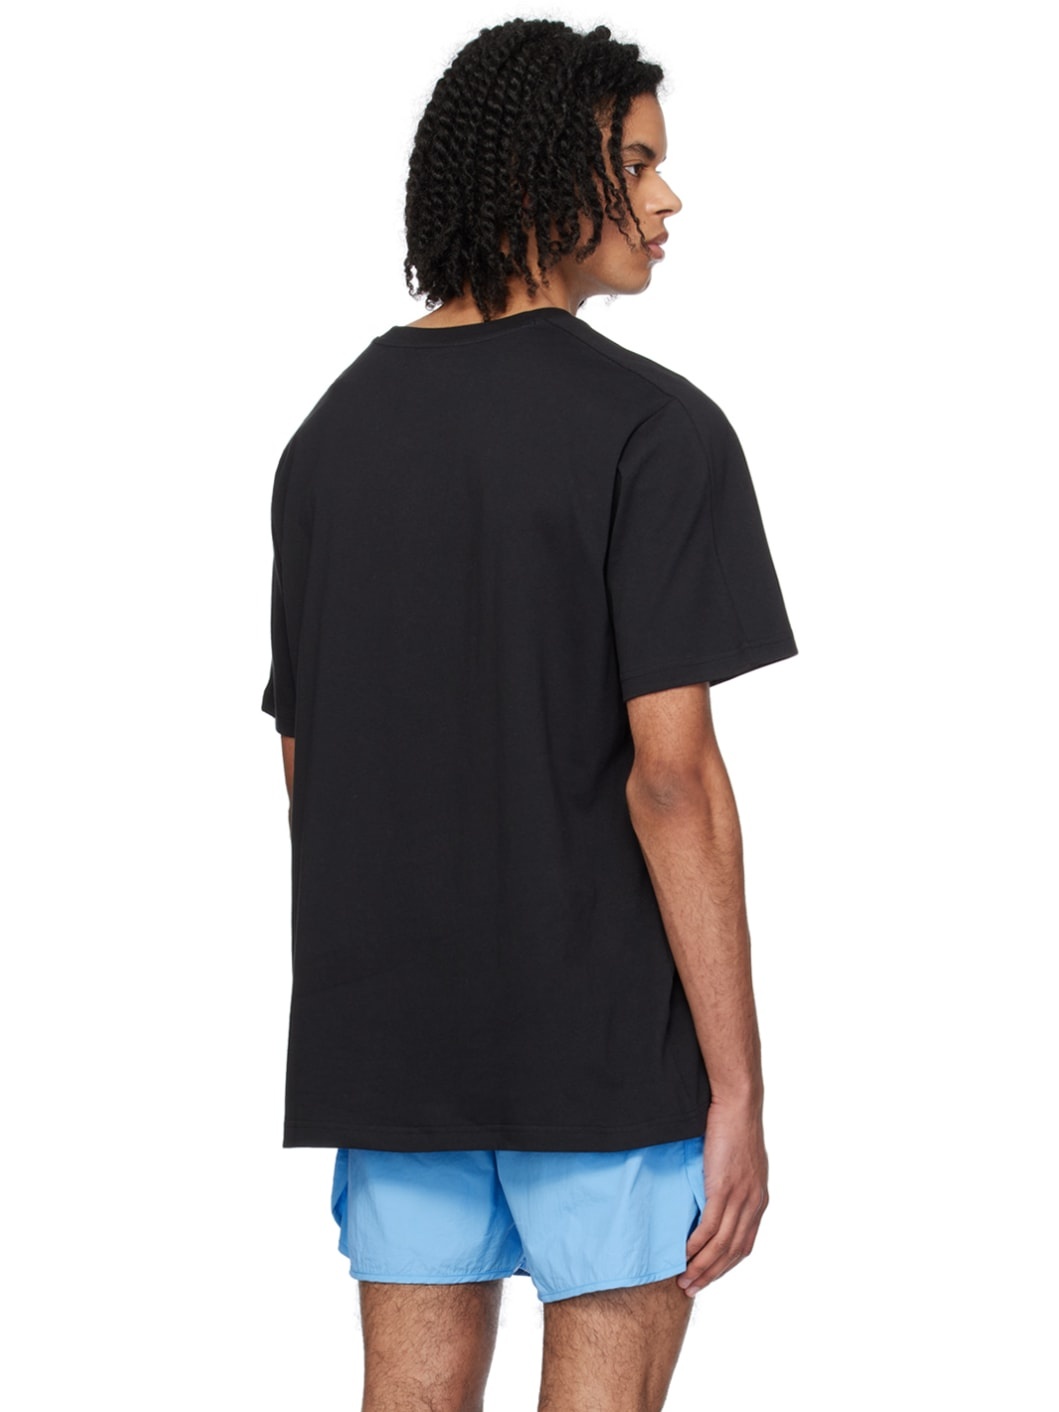 Black Graphic T-Shirt - 3